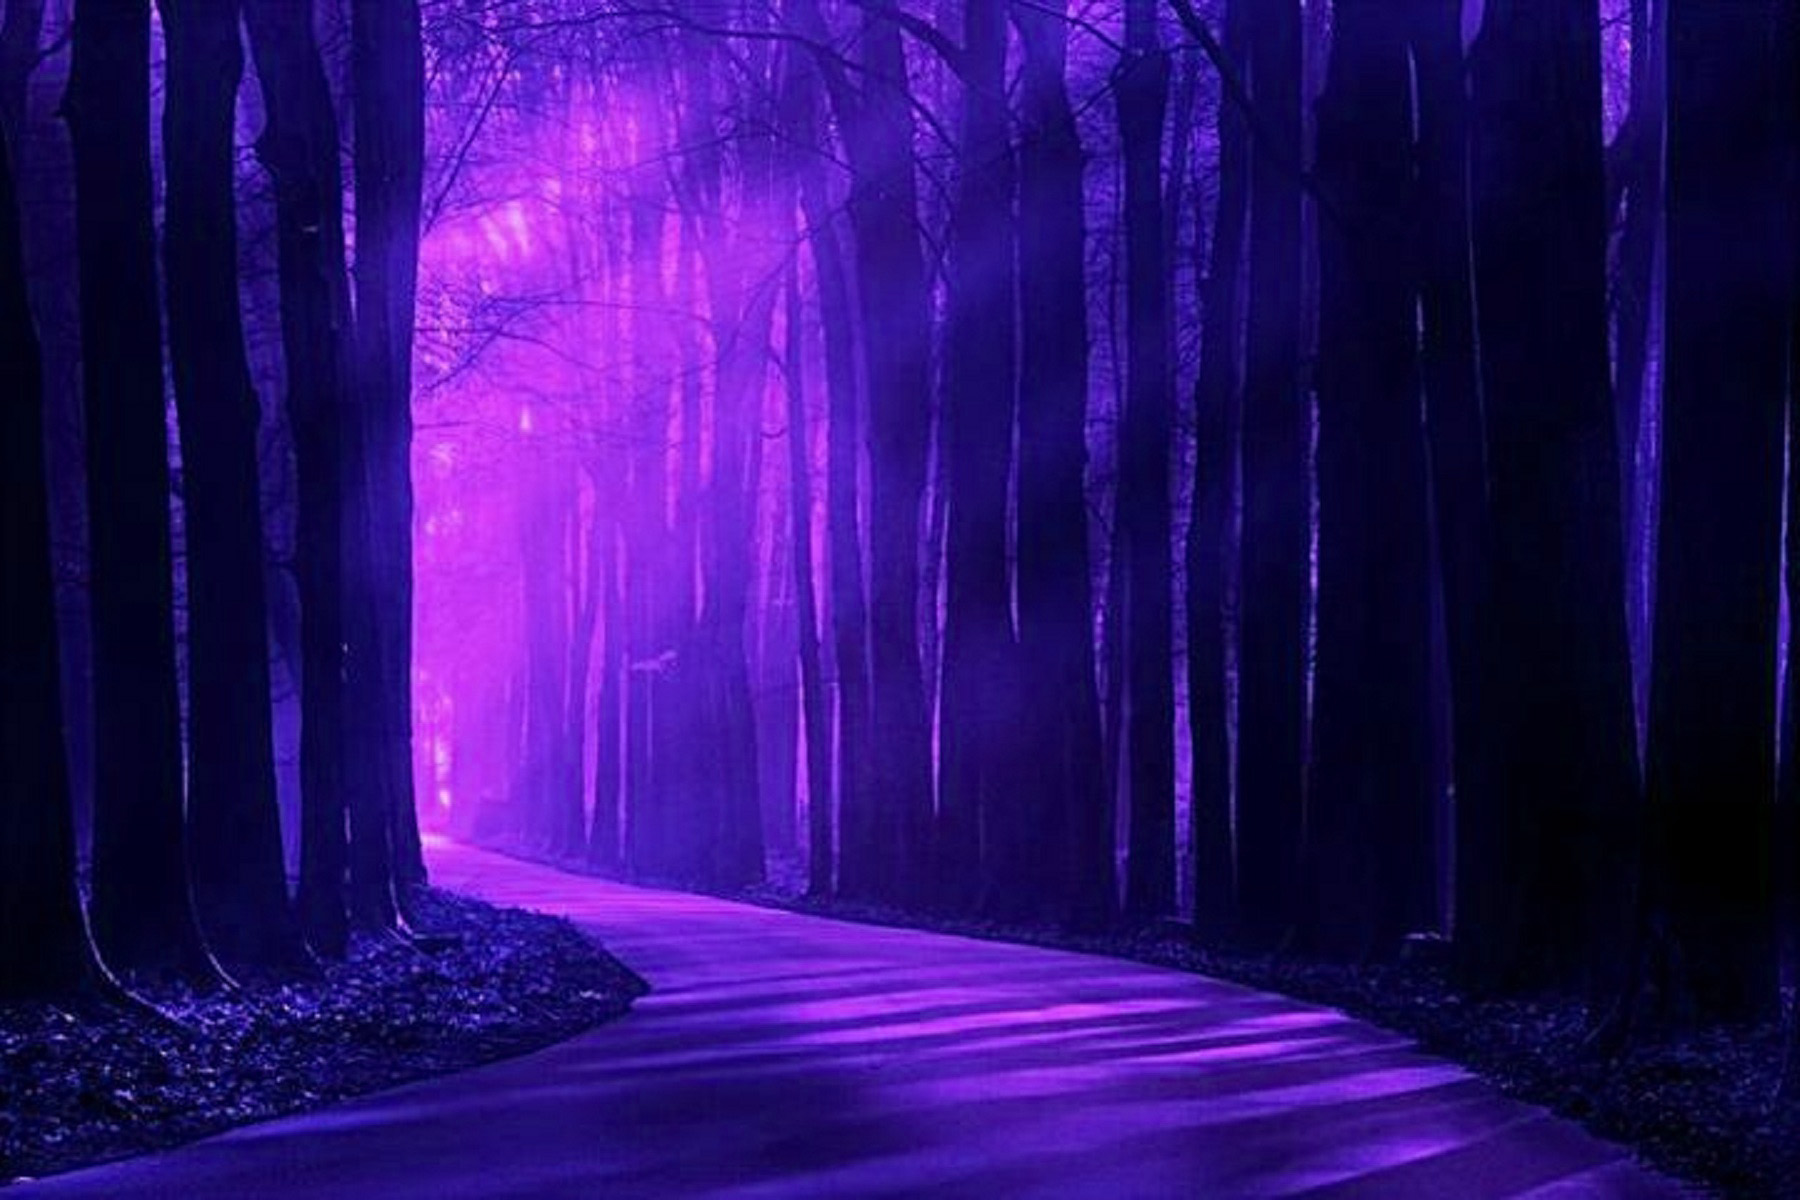 purple peaceful scenery wallpaper for dell laptop